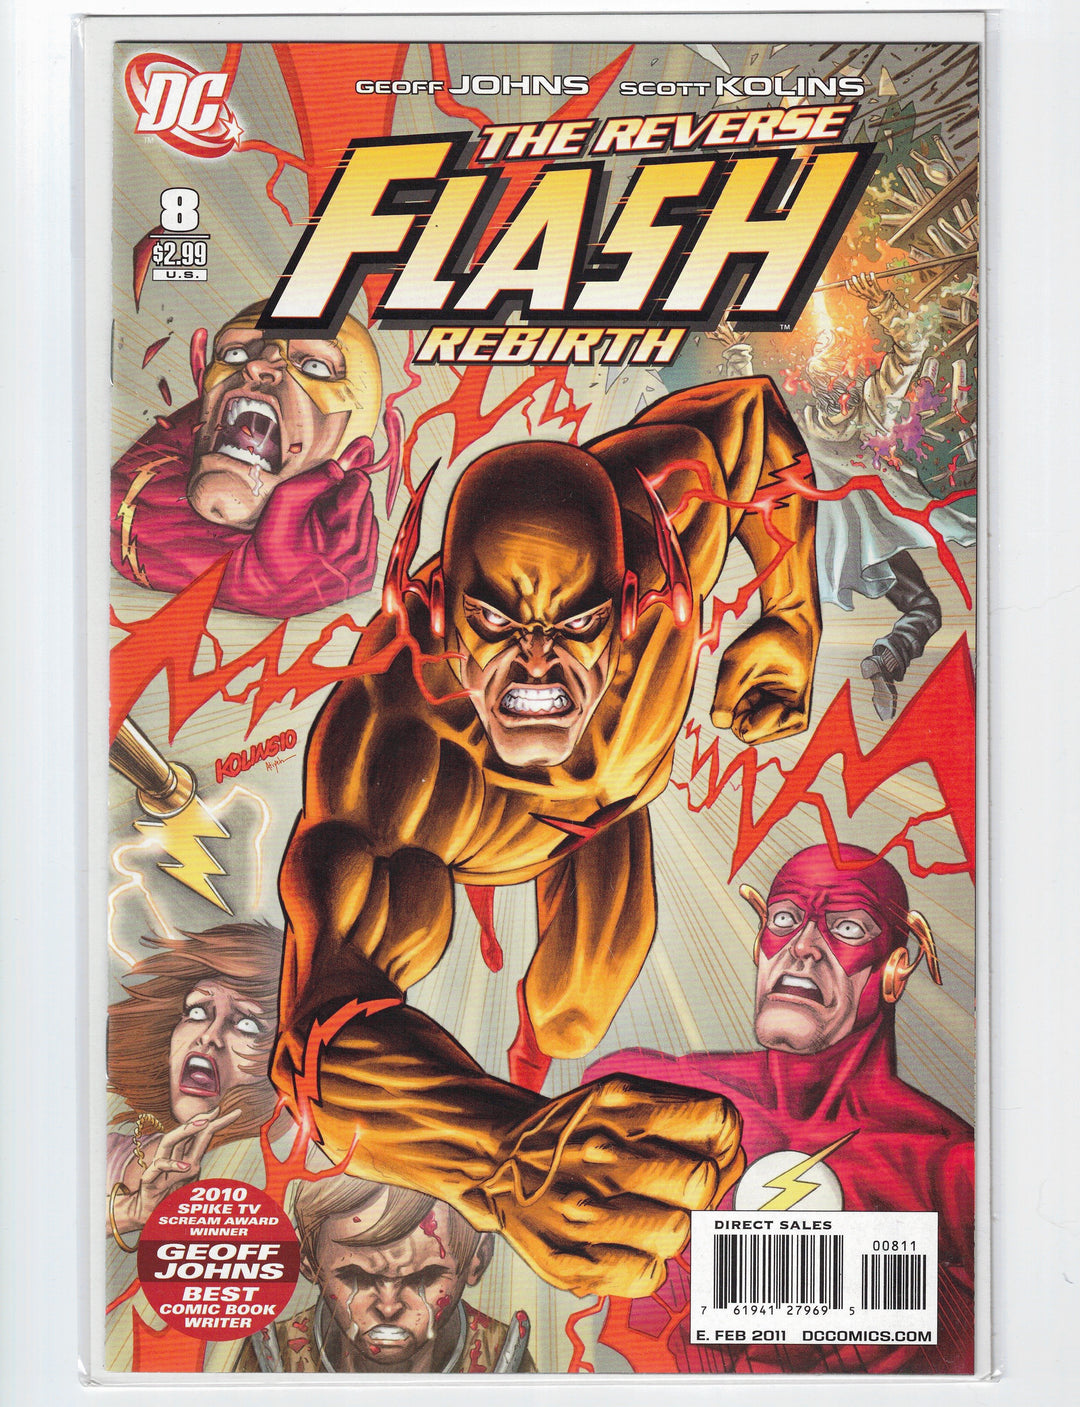 Flash: Brightest Day #1-12